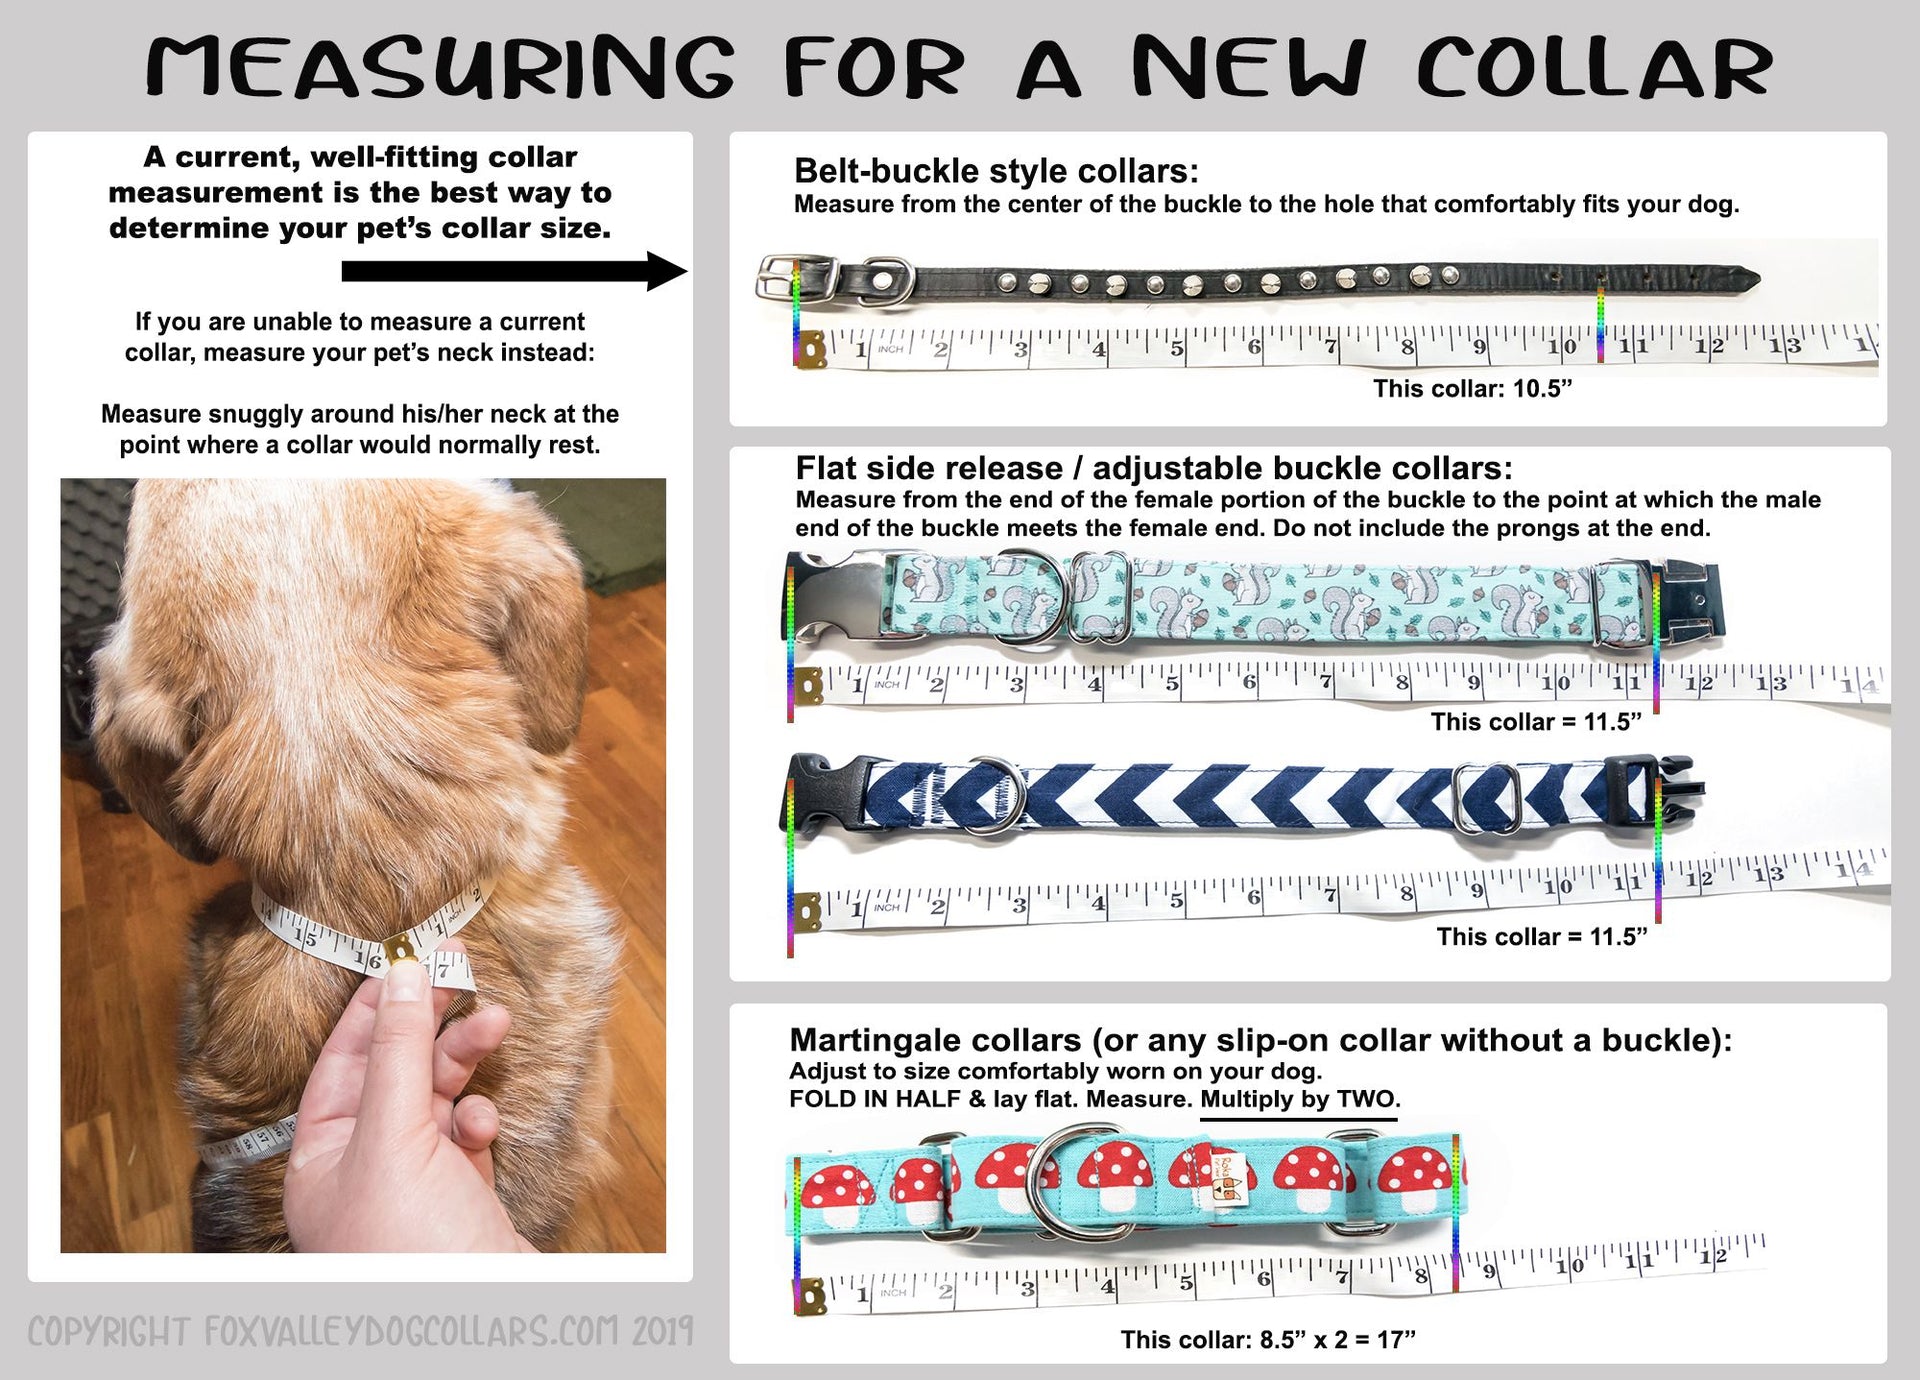 20 Cool Dog Collars - Best Useful and Stylish Dog Collars